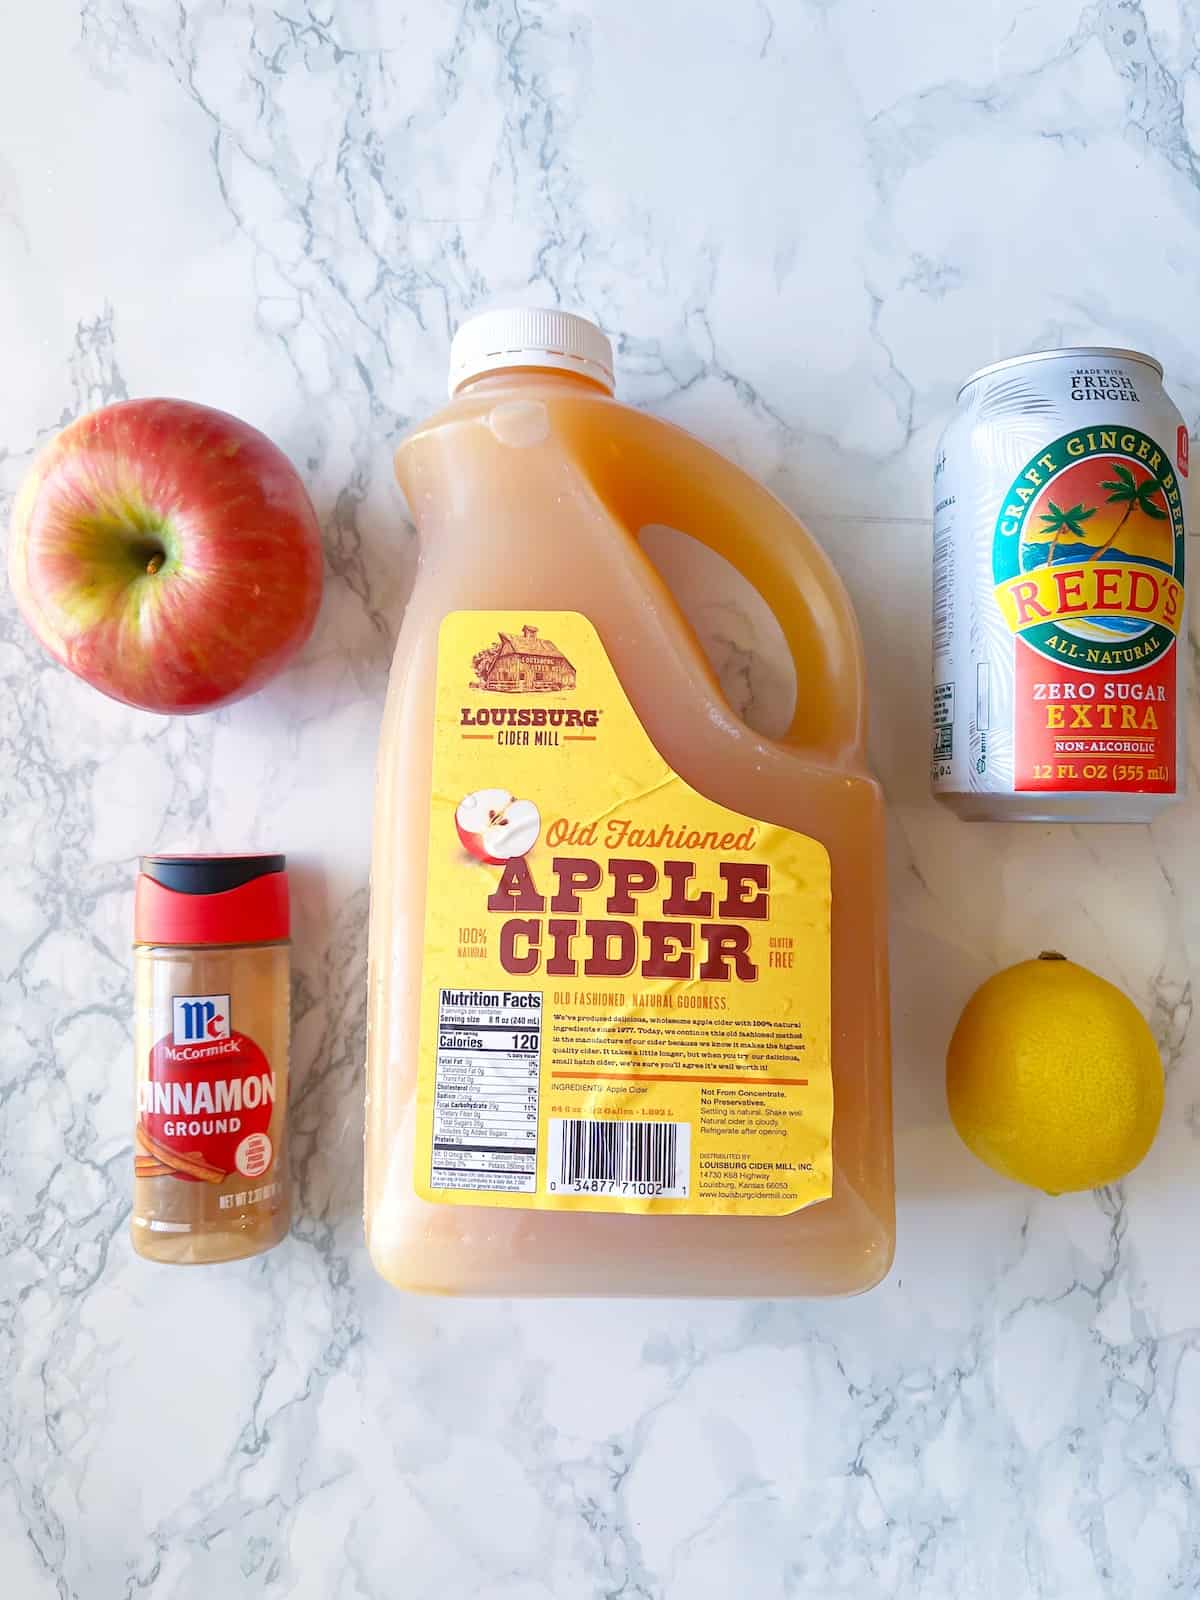 Apple cider, cinnamon, lemon, and ginger beer